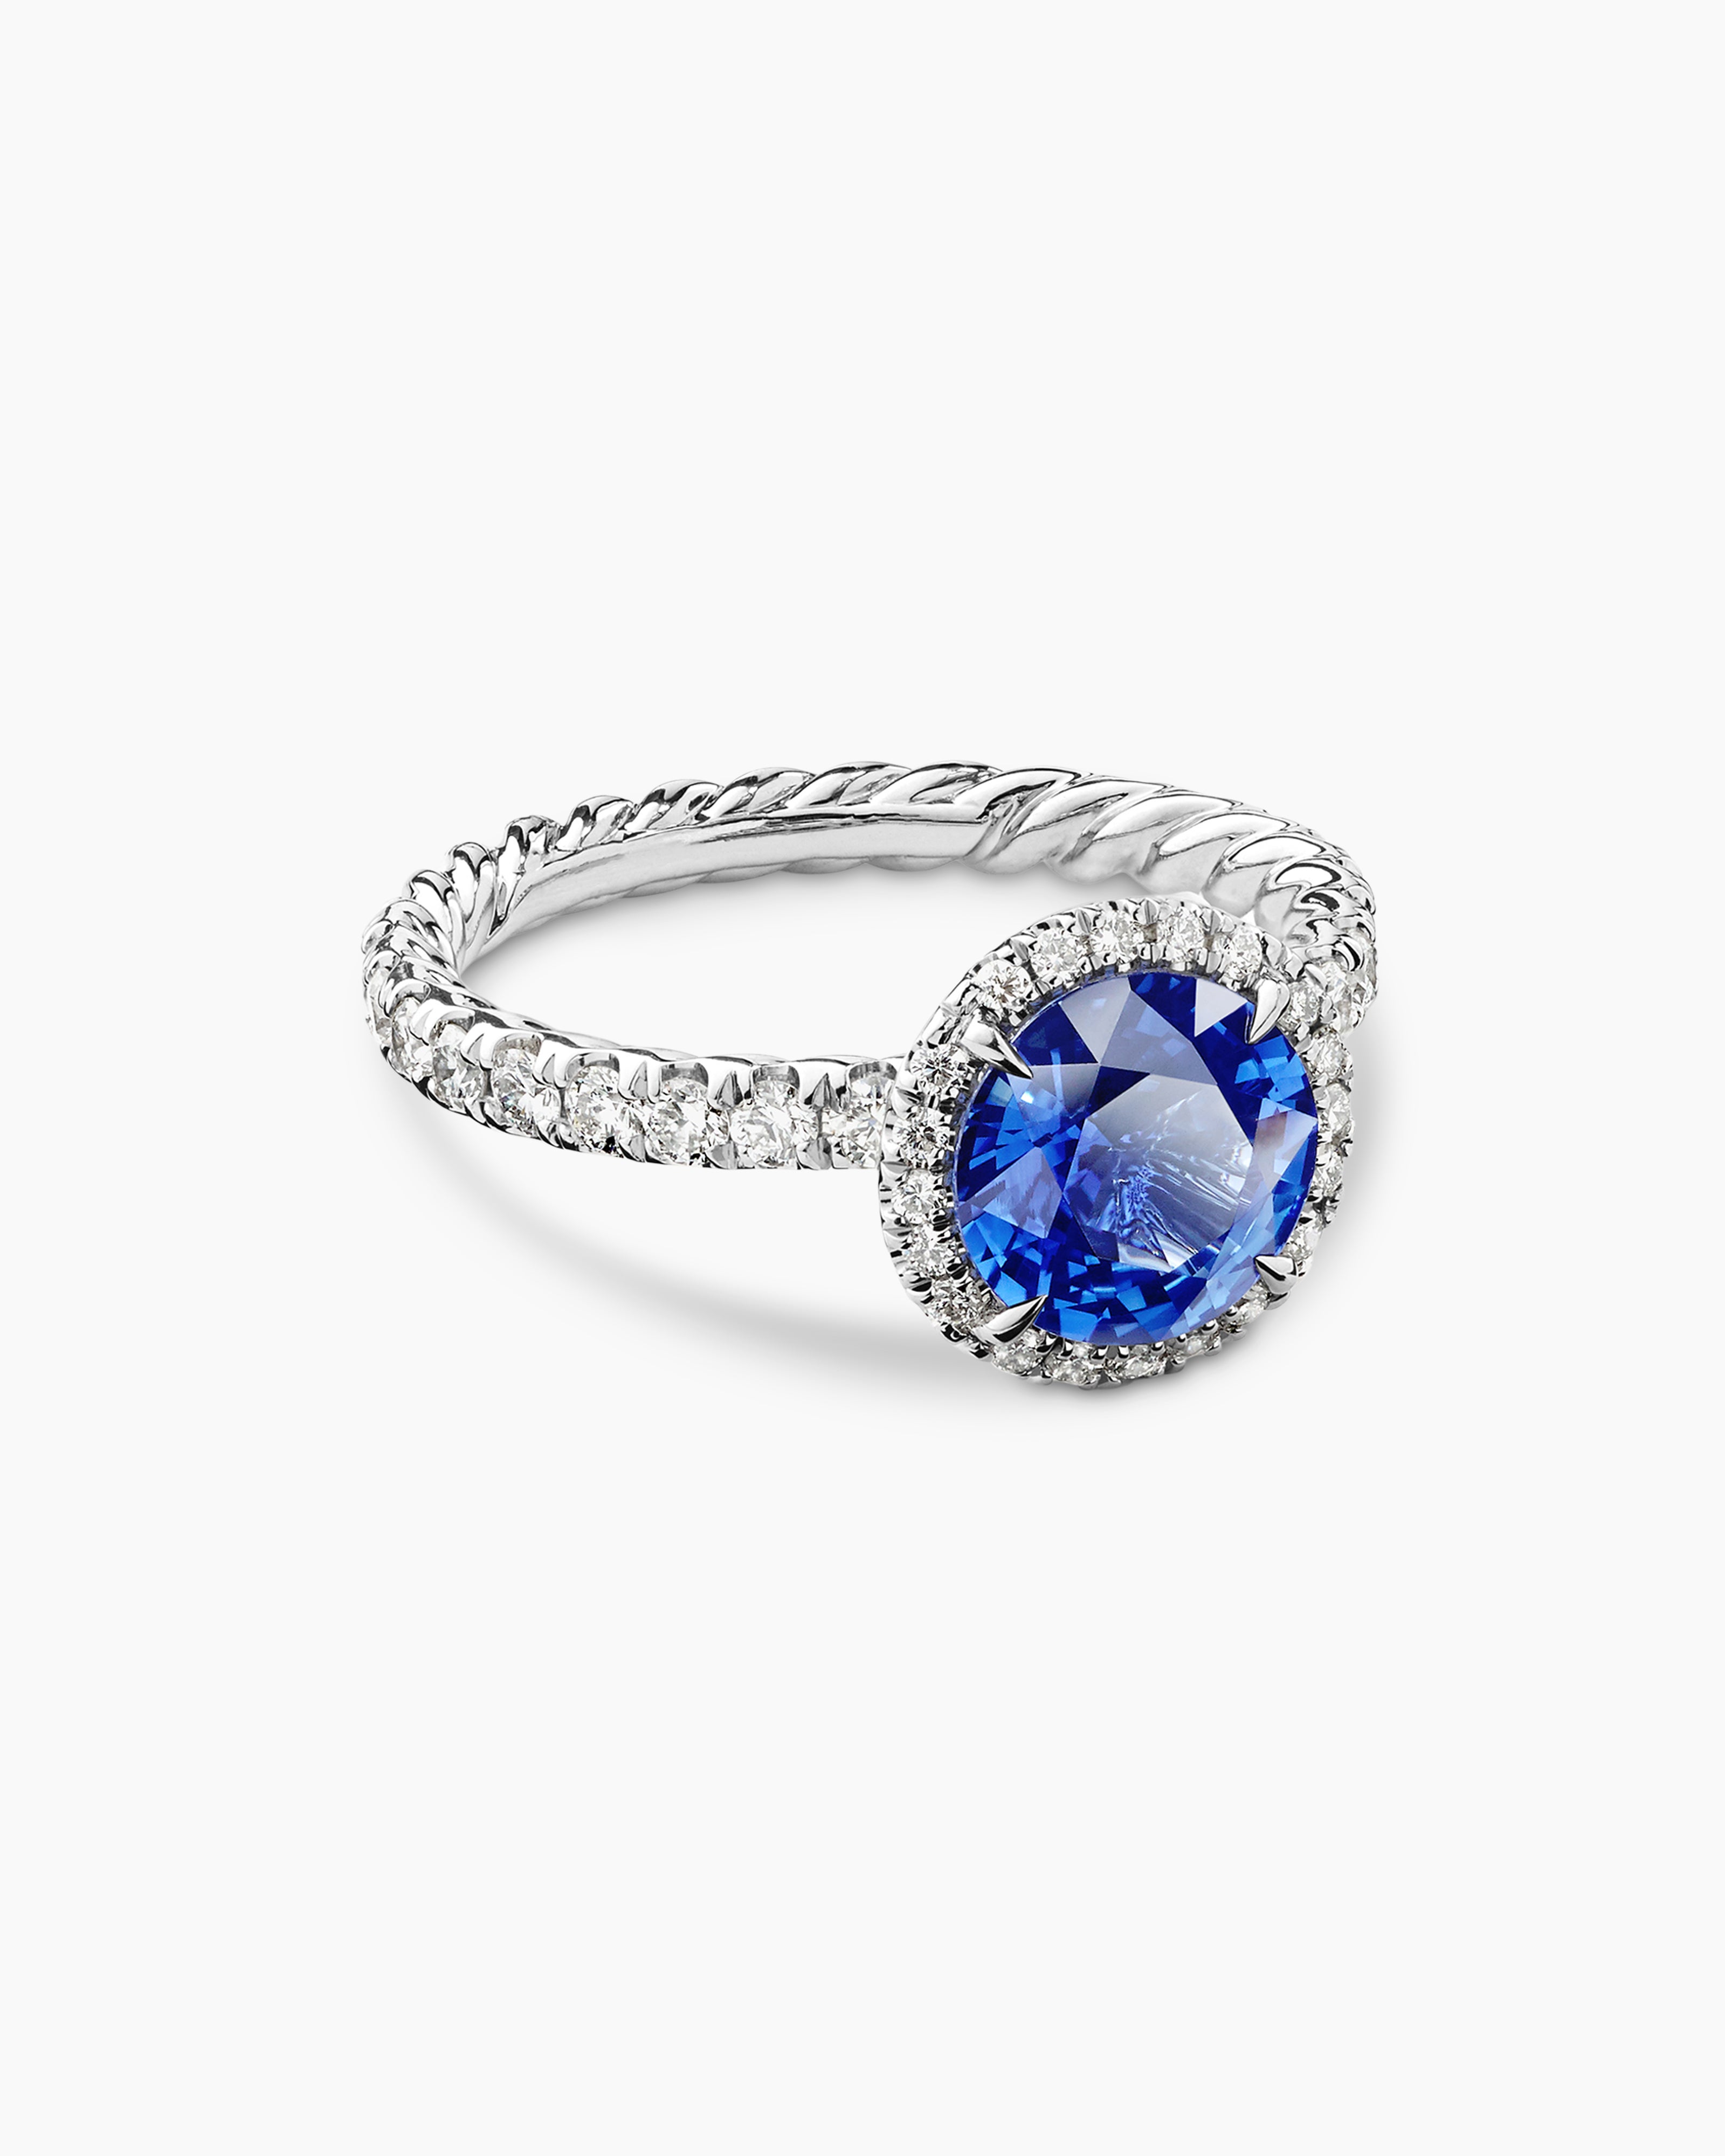 12.56 carat Cushion Cut Kashmir Sapphire Ring – Ronald Abram